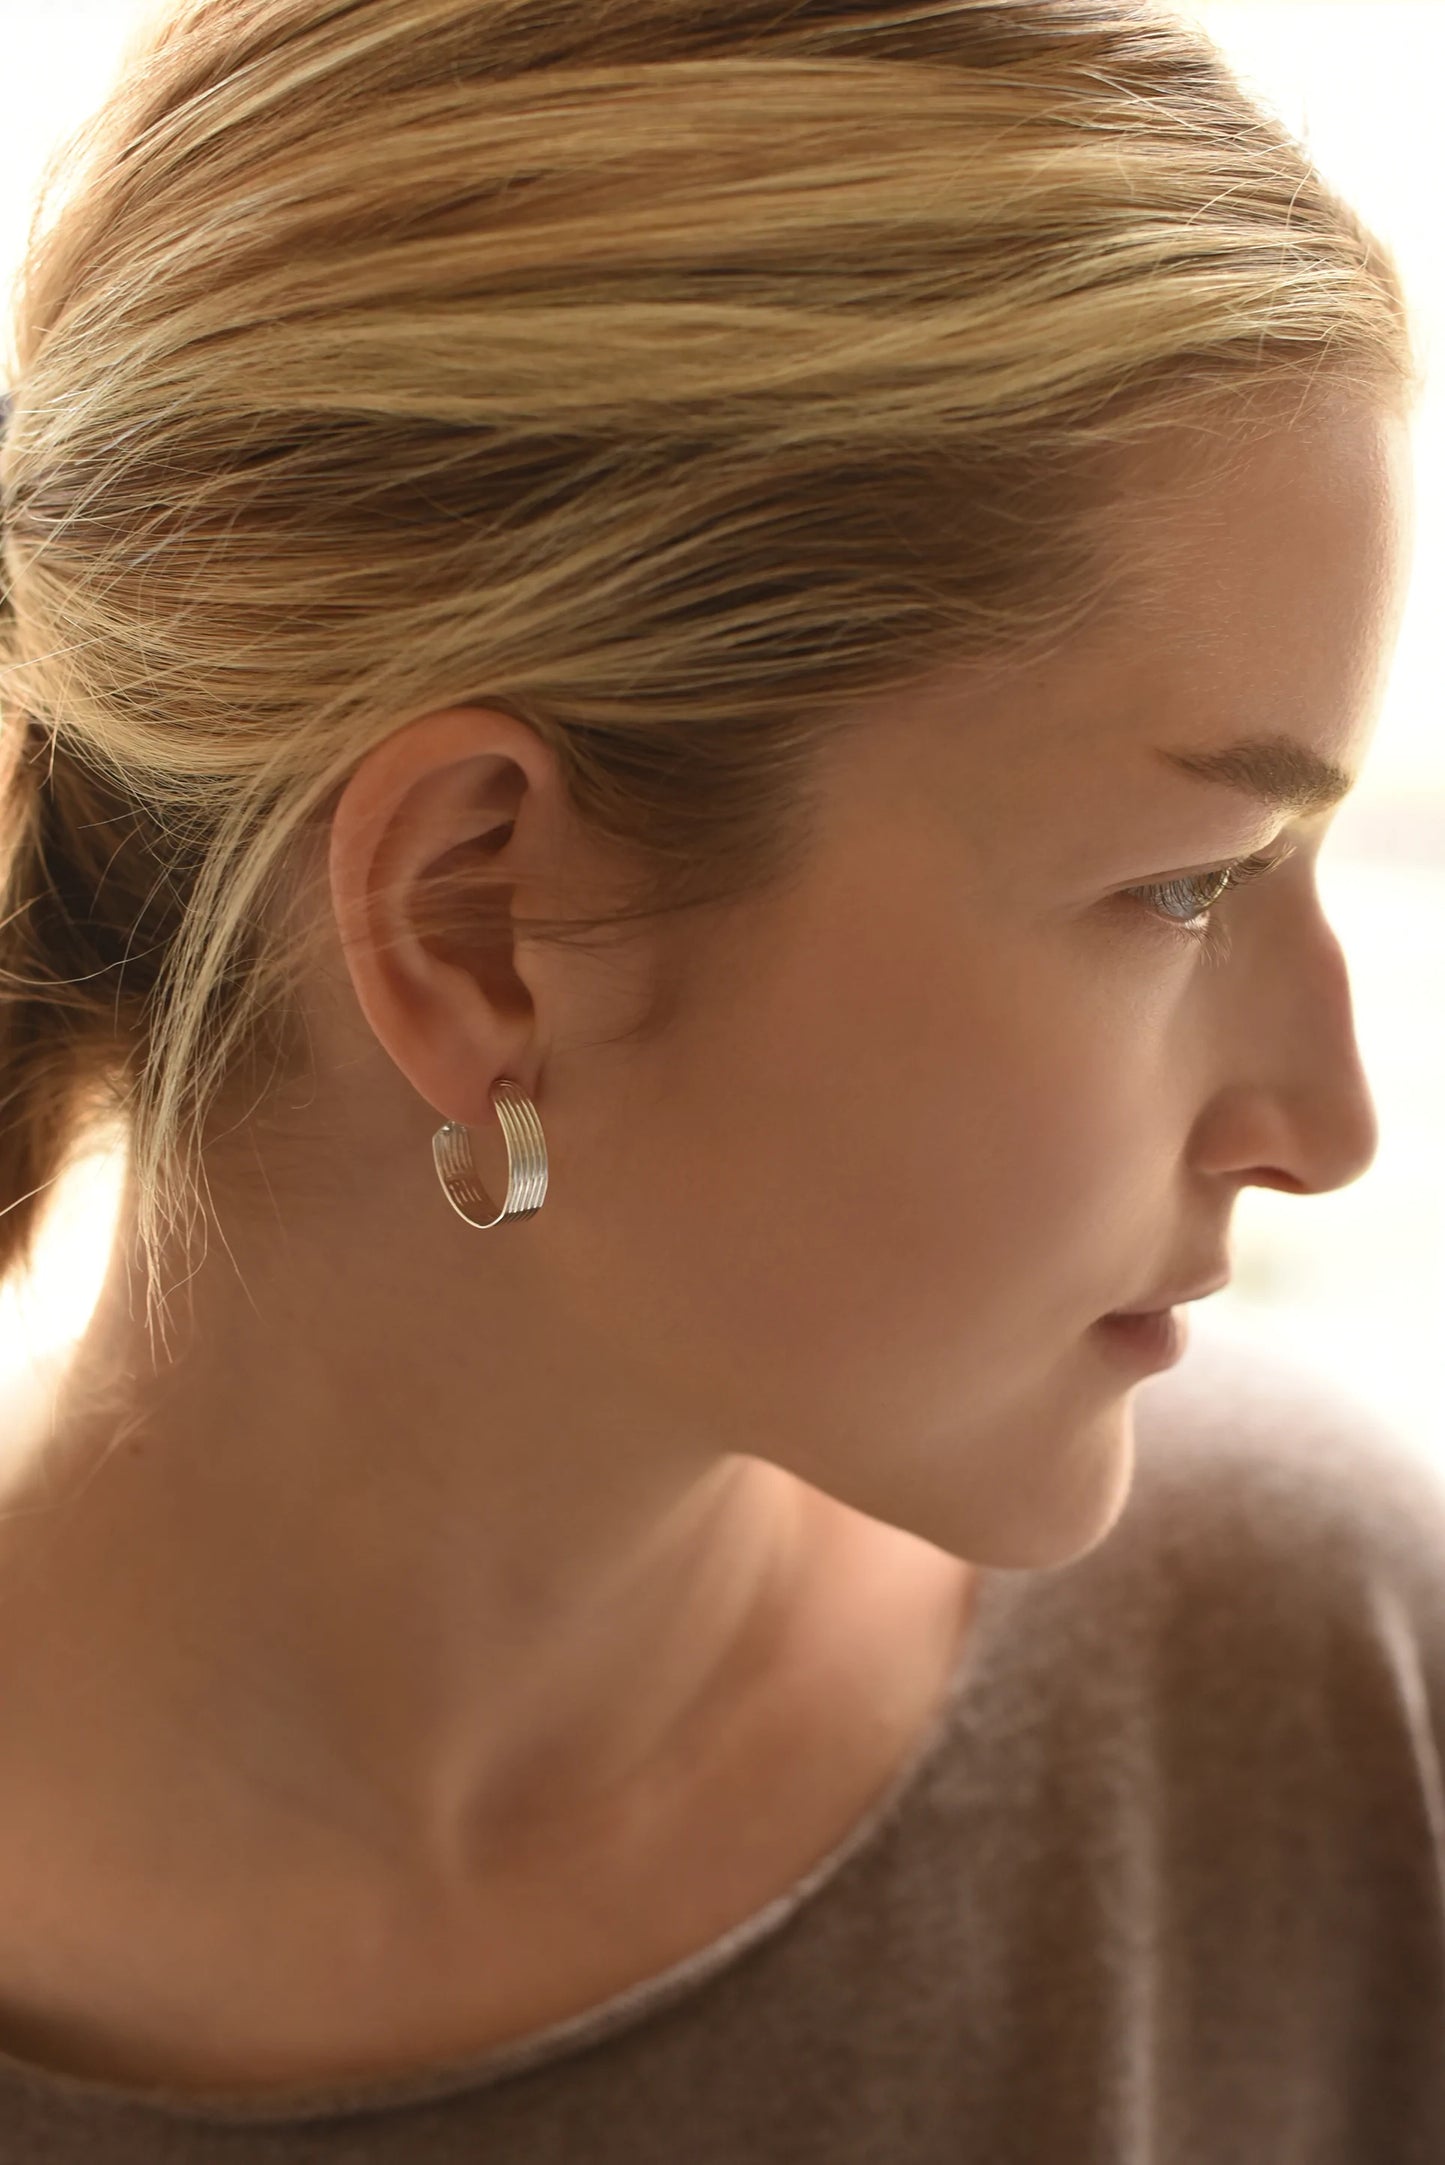 Woman wearing silver hoop earrings with linear designs, side view.